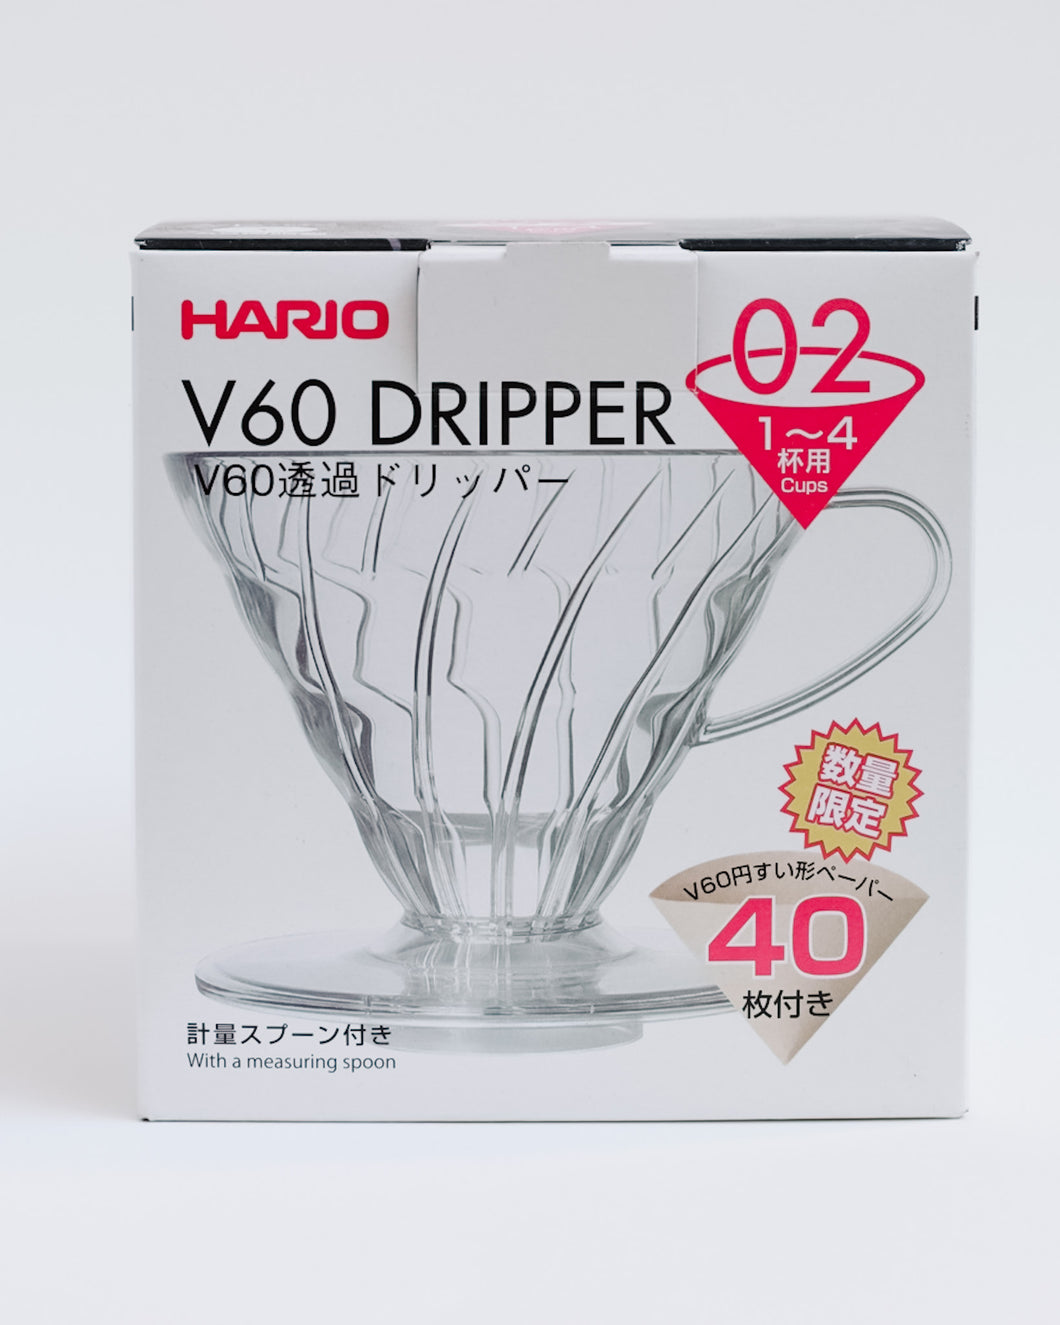 Hario 2 cup V60 plastic starter set (V60 and 40 paper filters)